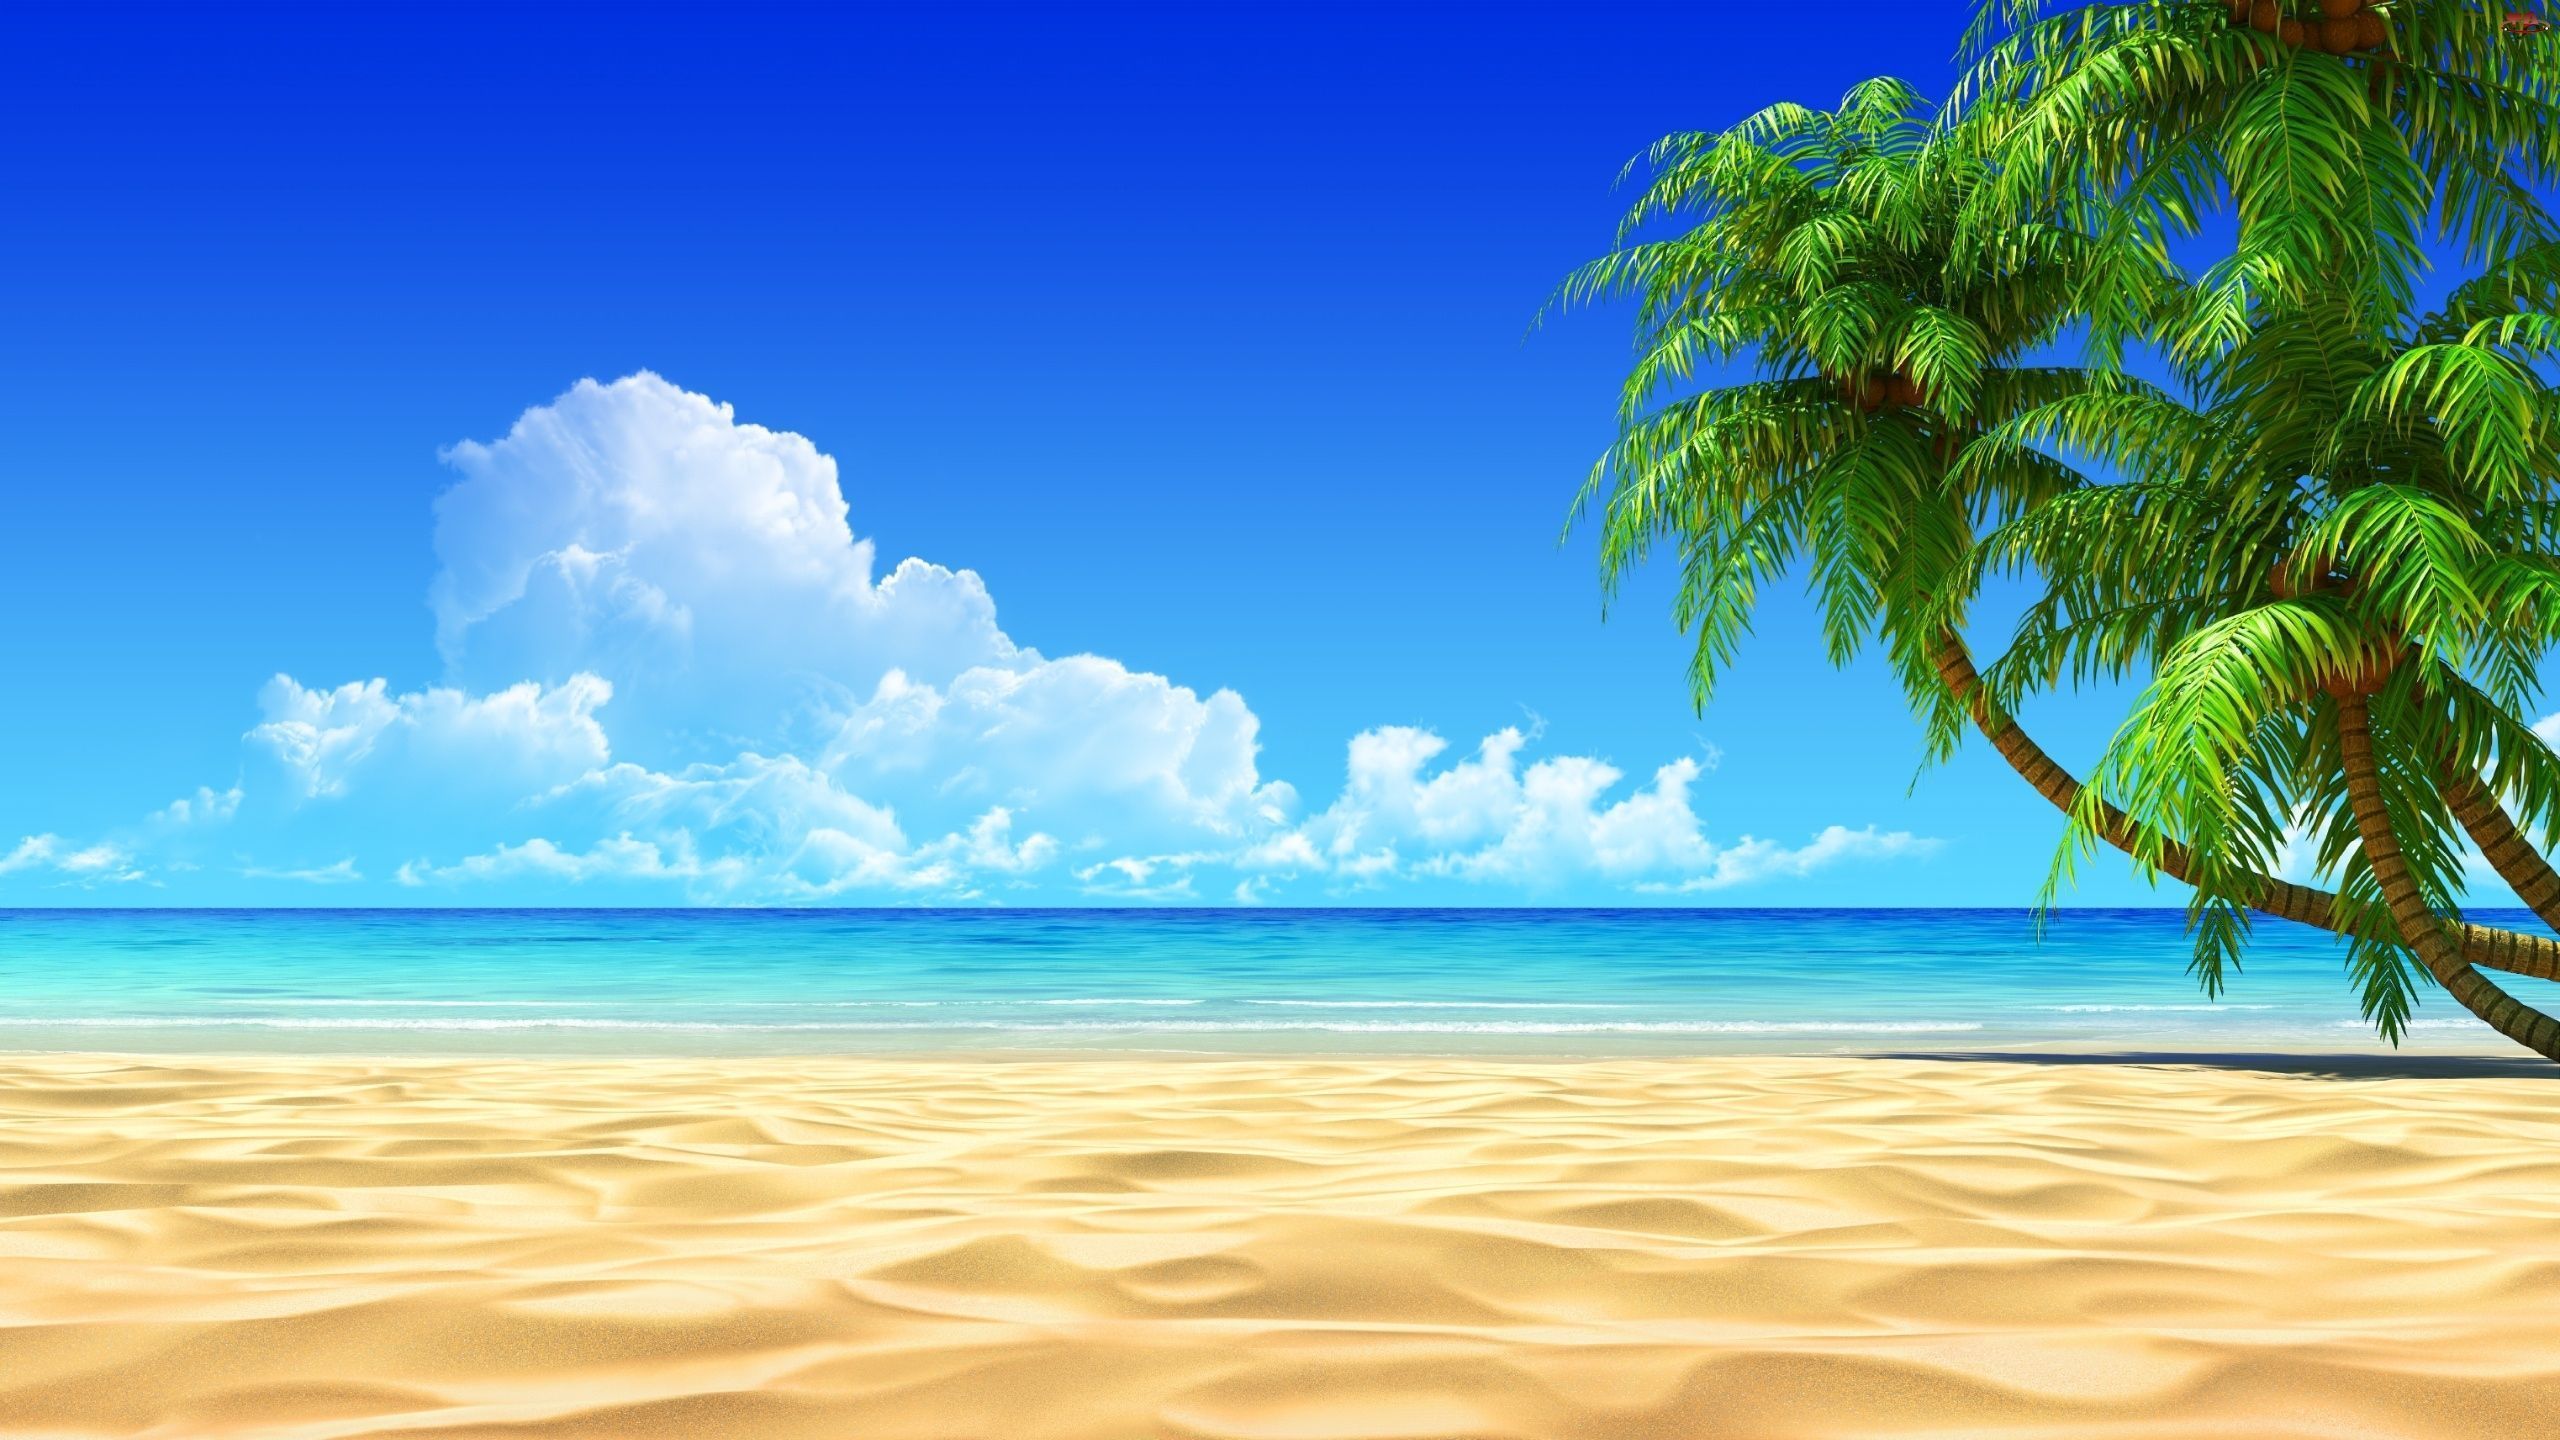 Beach HD Wallpaper For Stunning Background! - Bliz Pix